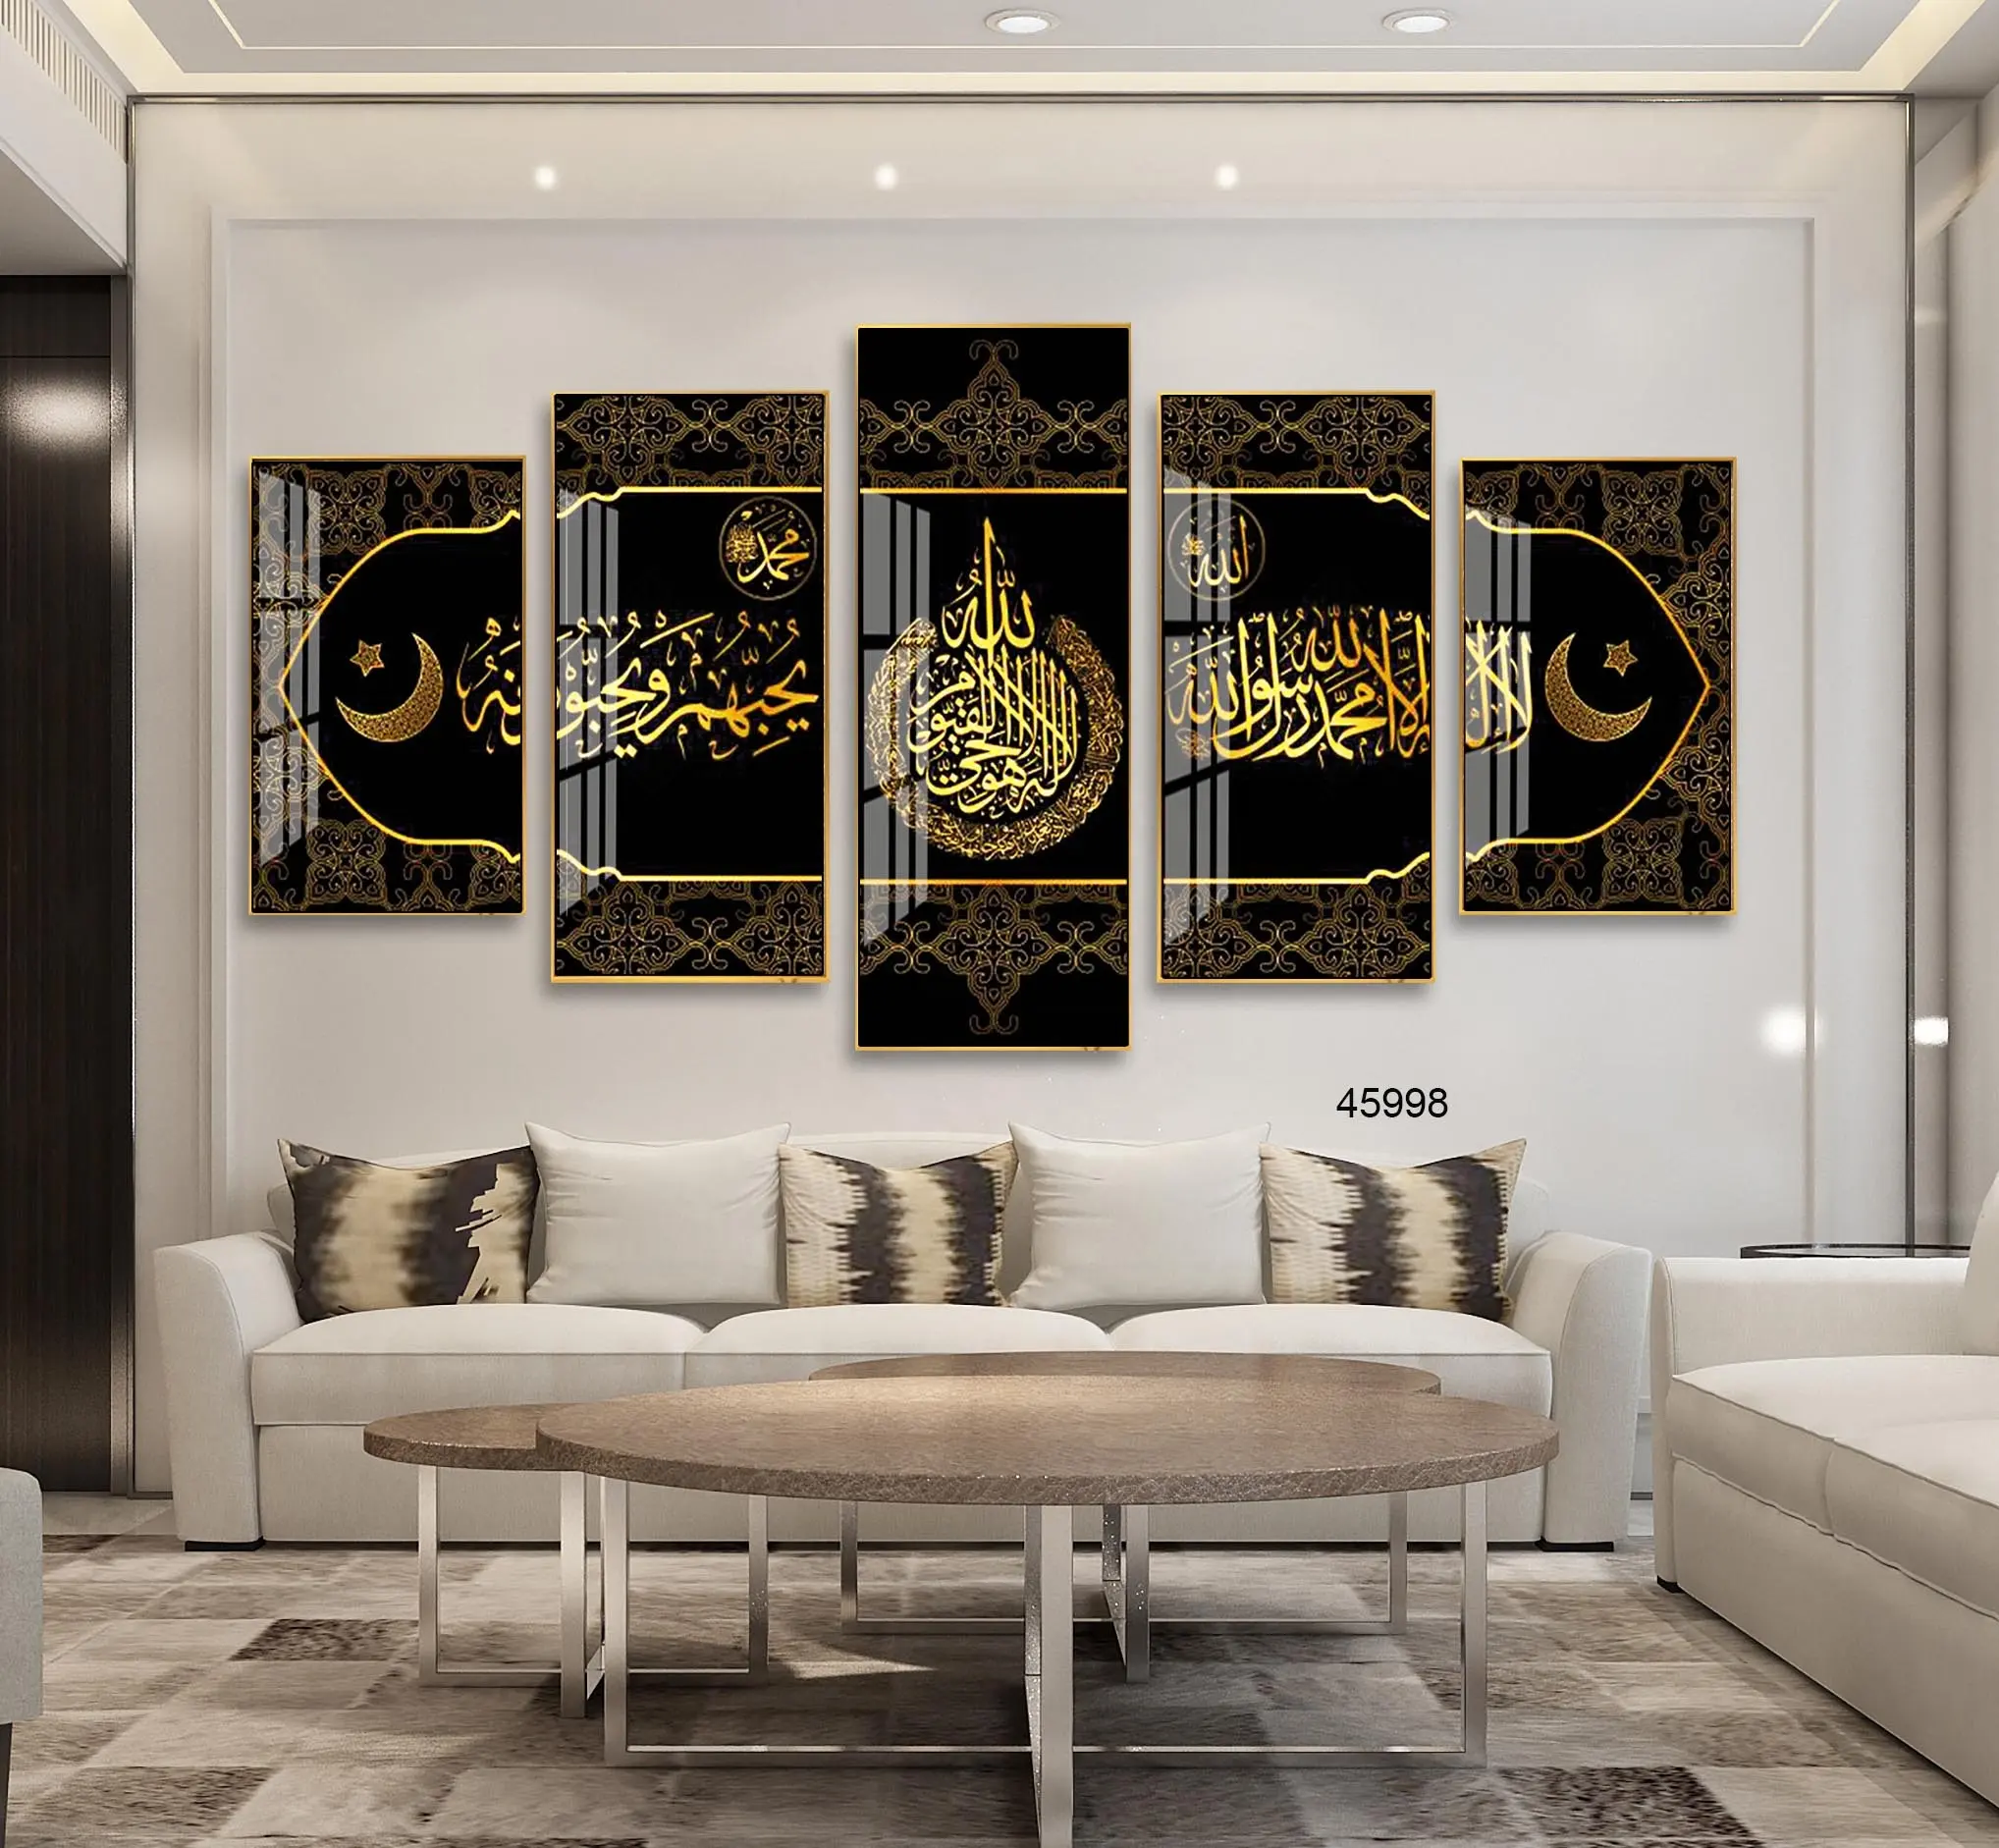 थोक इस्लामी फ्रेम अरबी सुलेख दीवार कला मुसलमानों चित्र क्रिस्टल चीनी मिट्टी के बरतन पेंटिंग प्रिंट 5 टुकड़ा दीवार कला